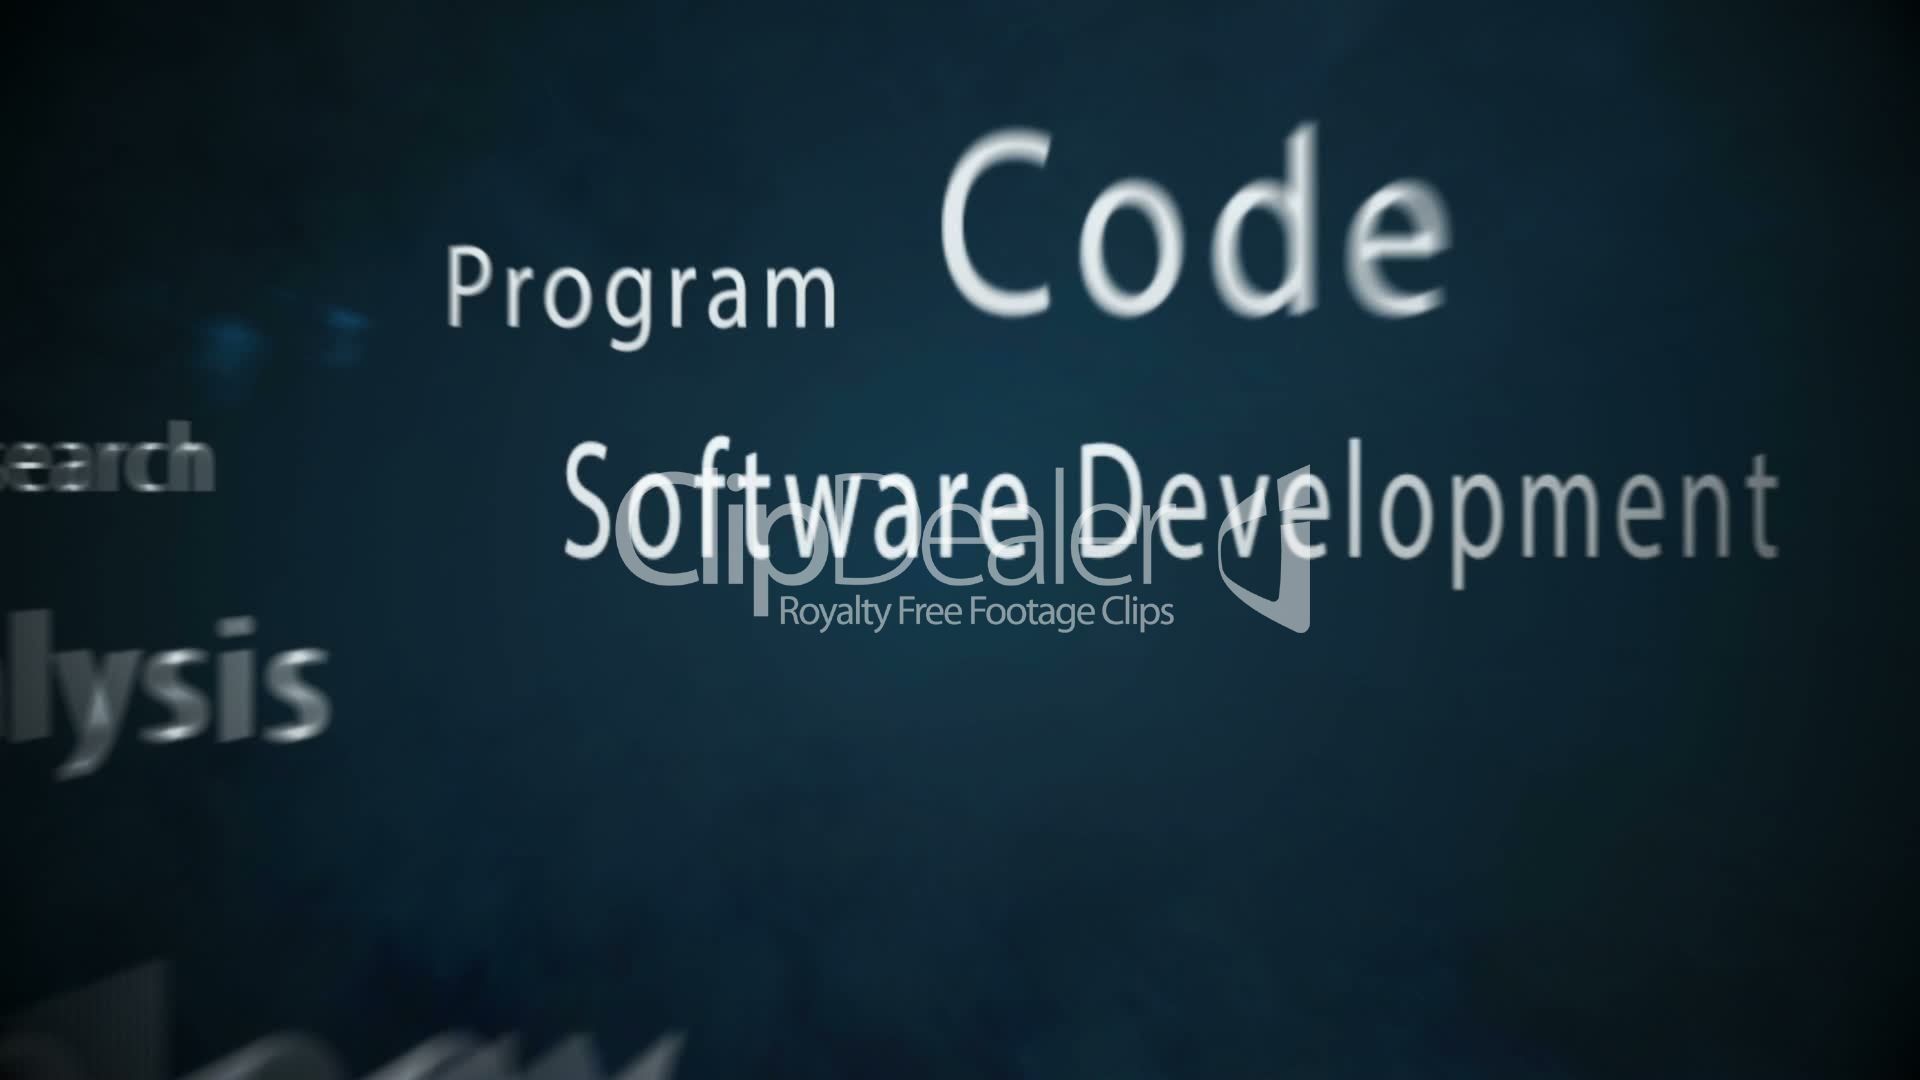 web development wallpaper hd